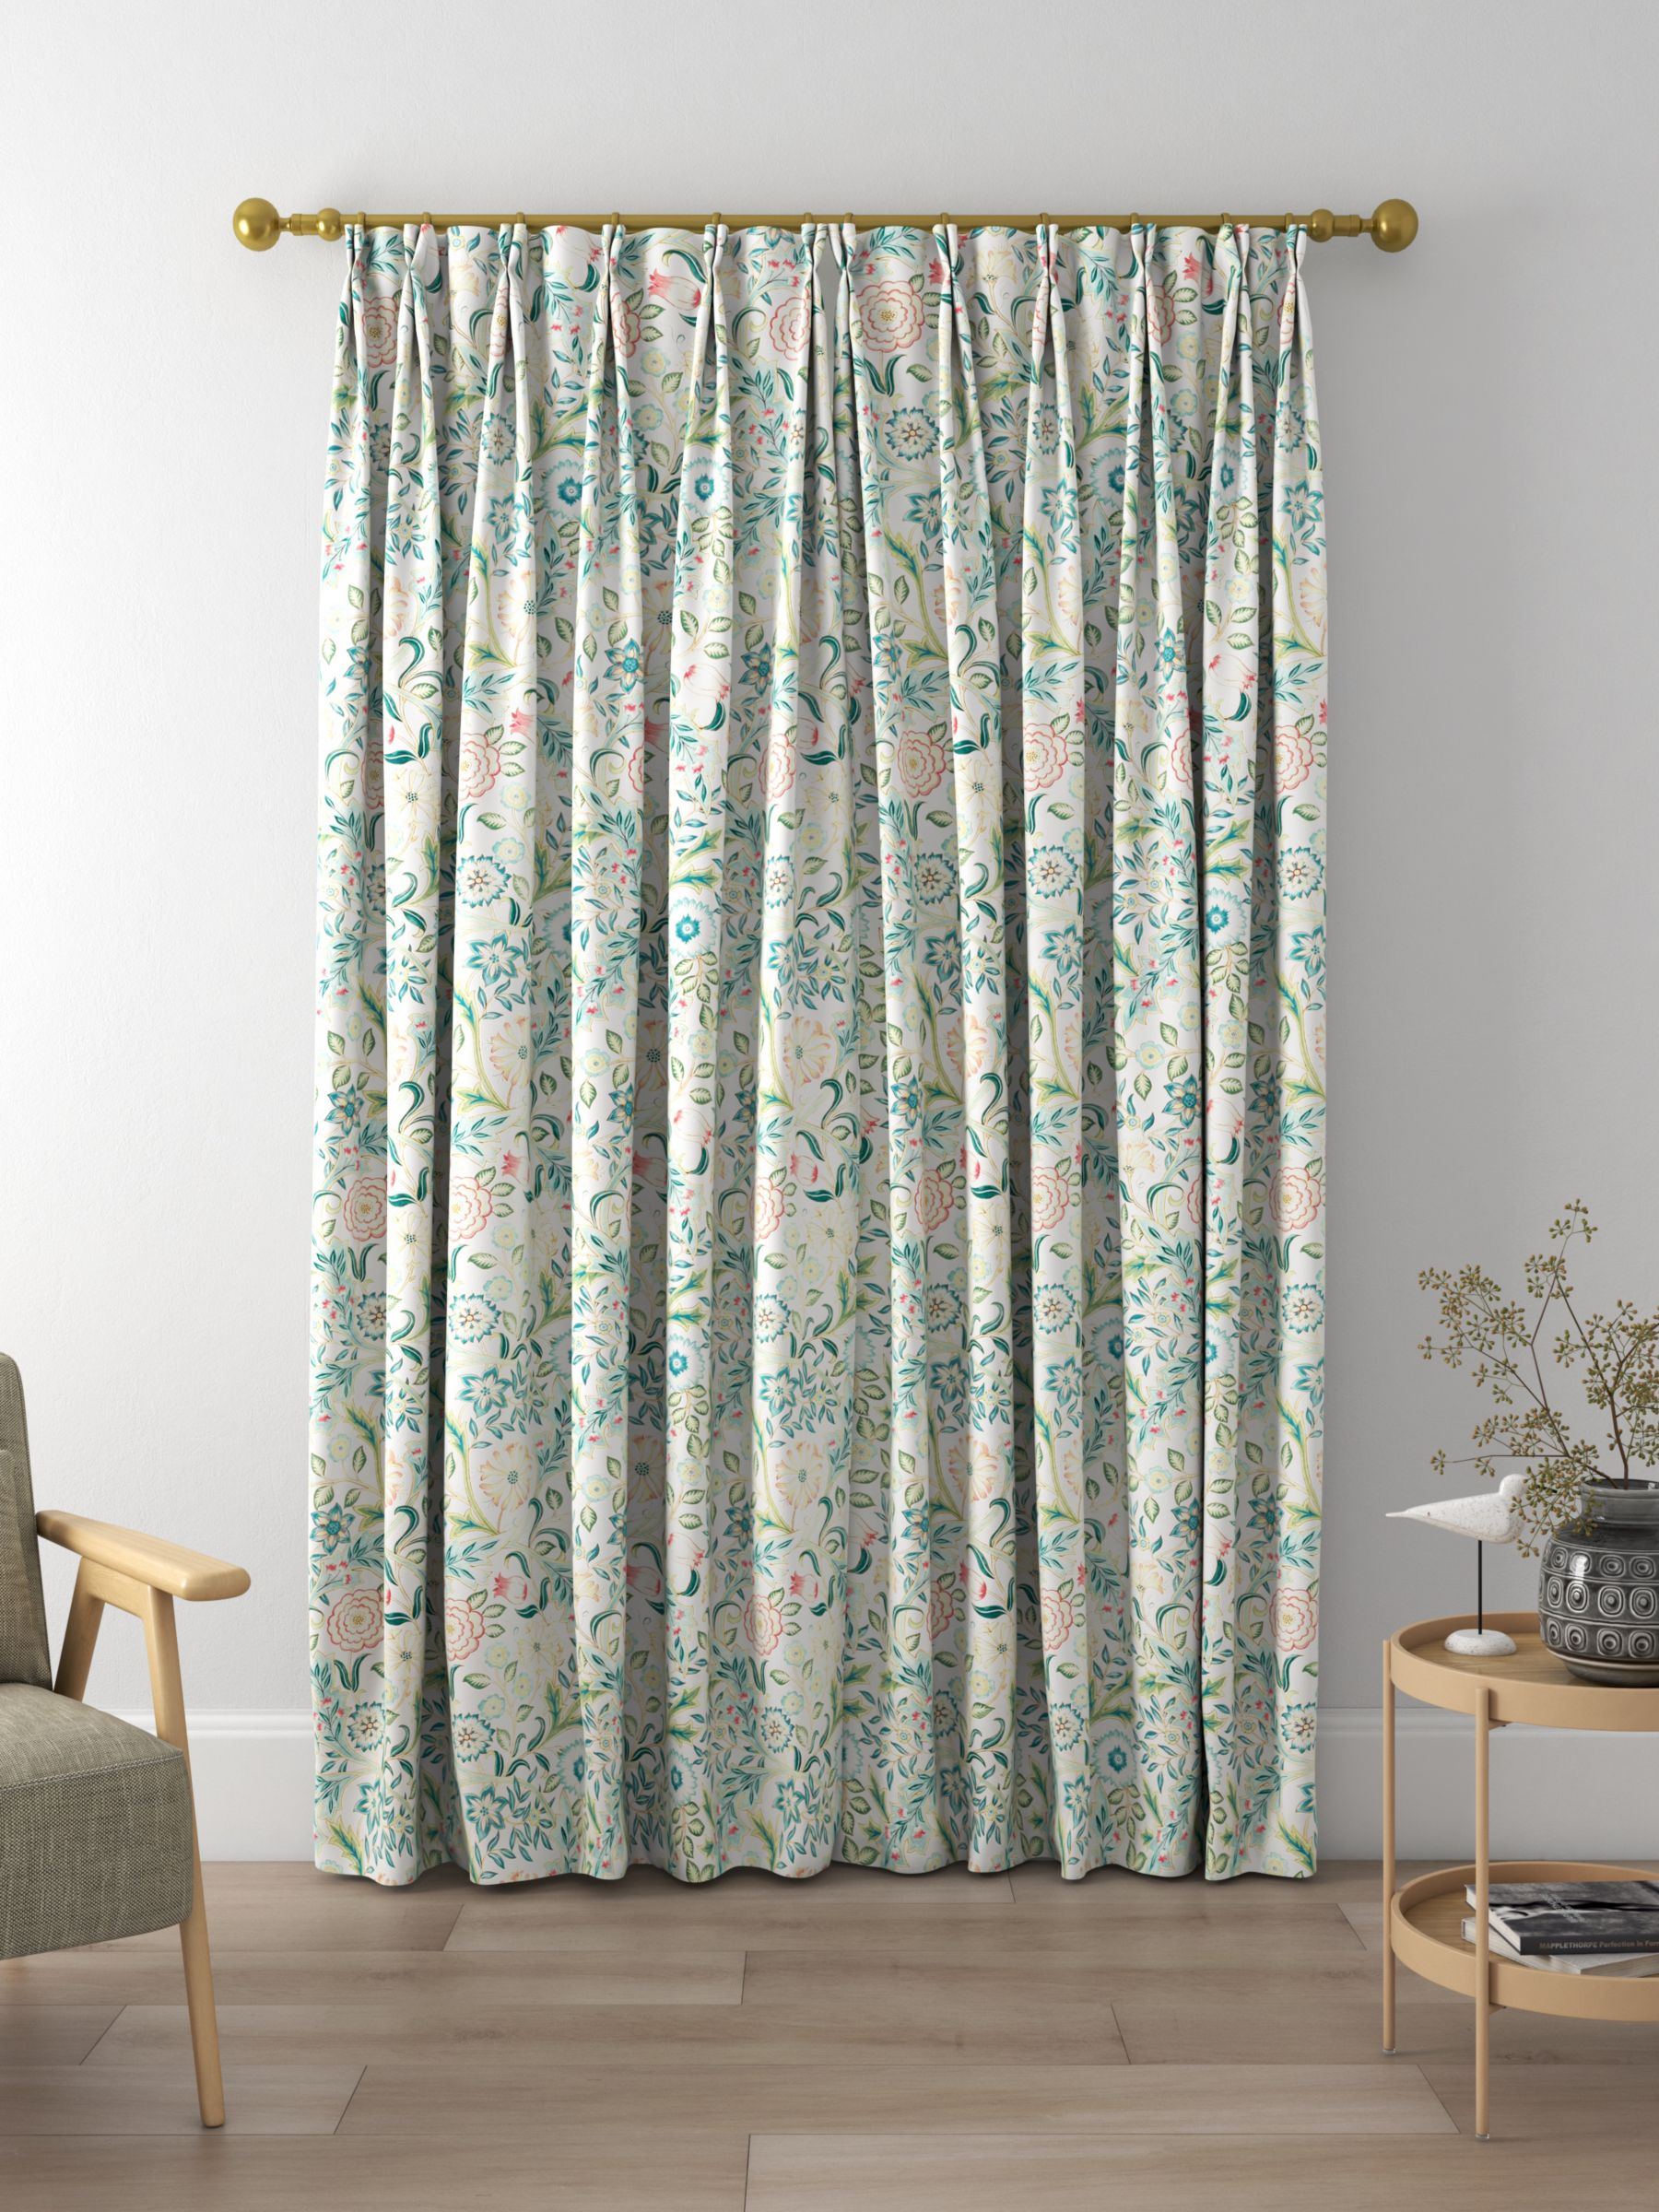 Morris & Co. Wilhelmina Made to Measure Curtains, Ivory